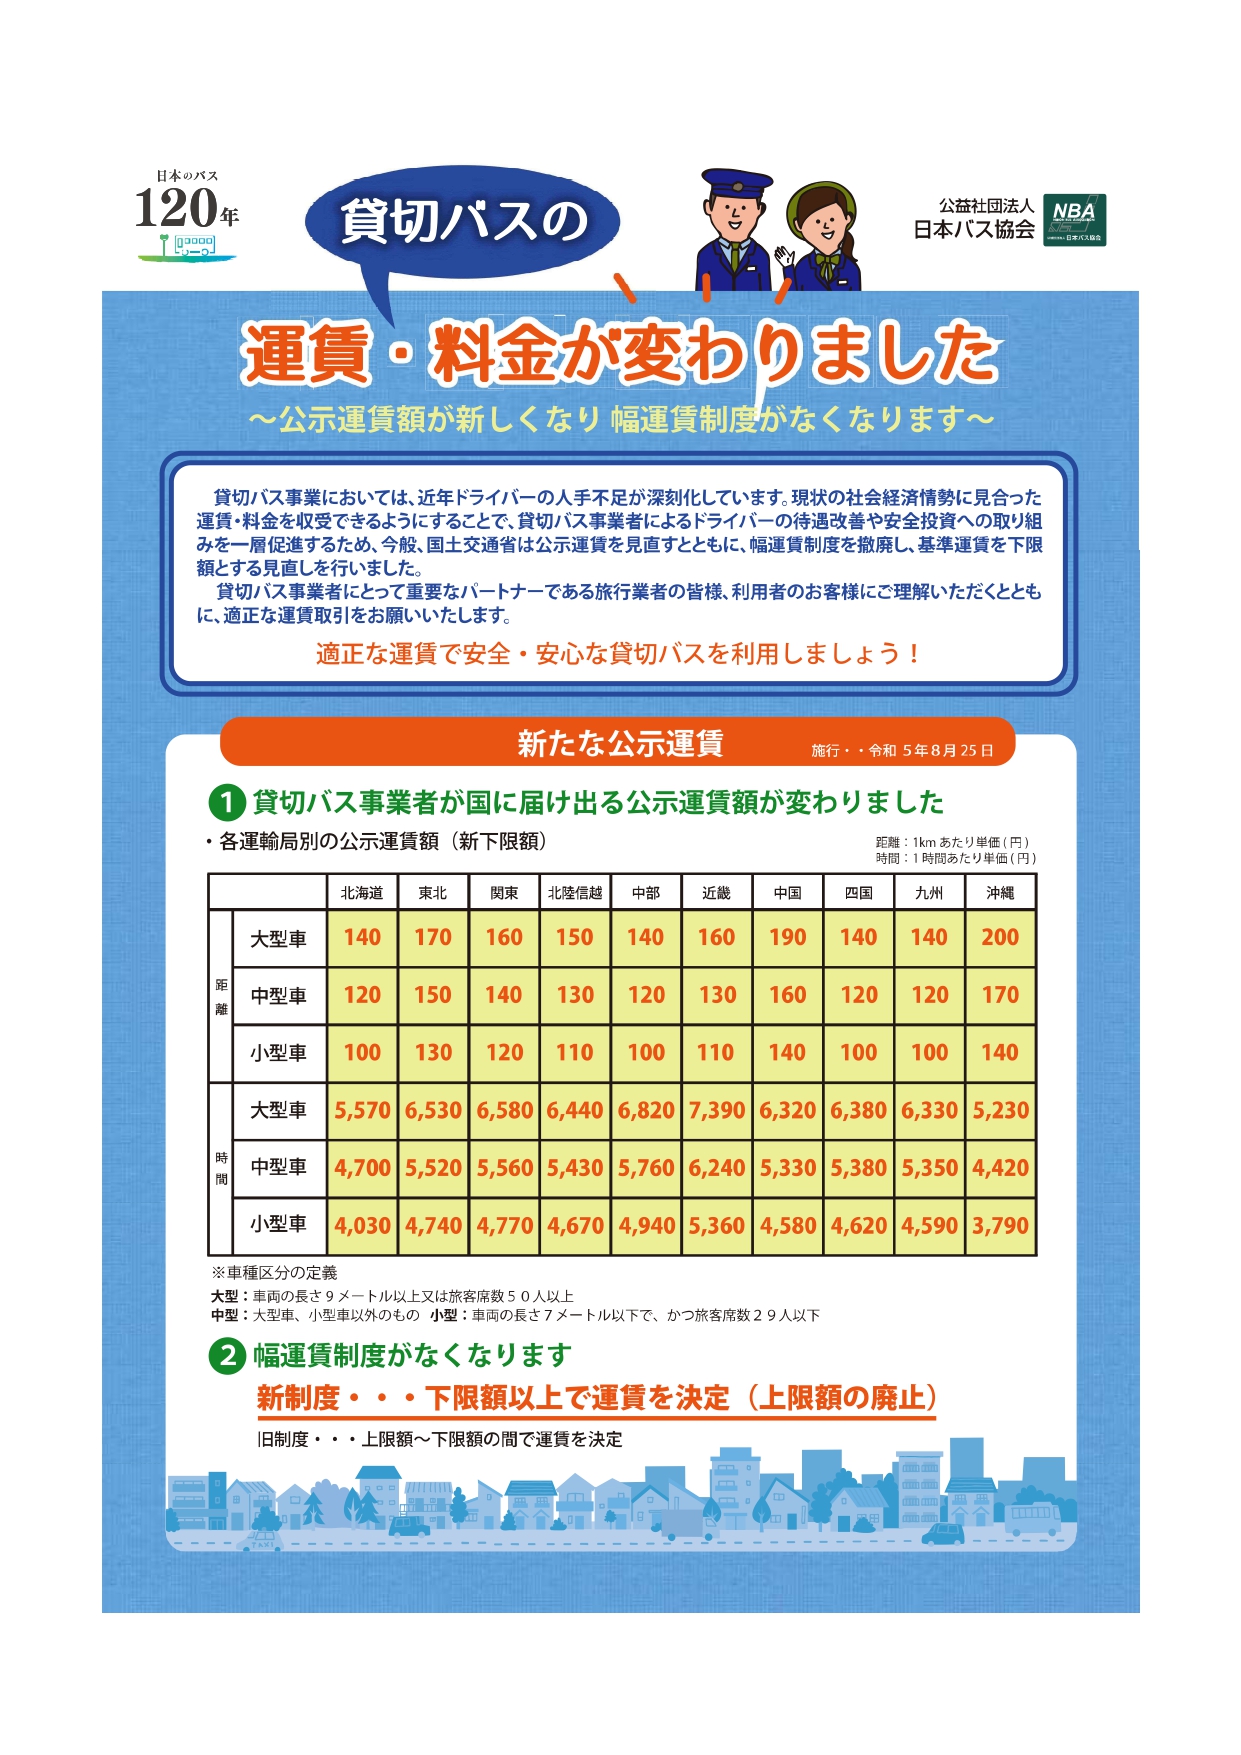 貸切バス新公示運賃_page-0001 (1)